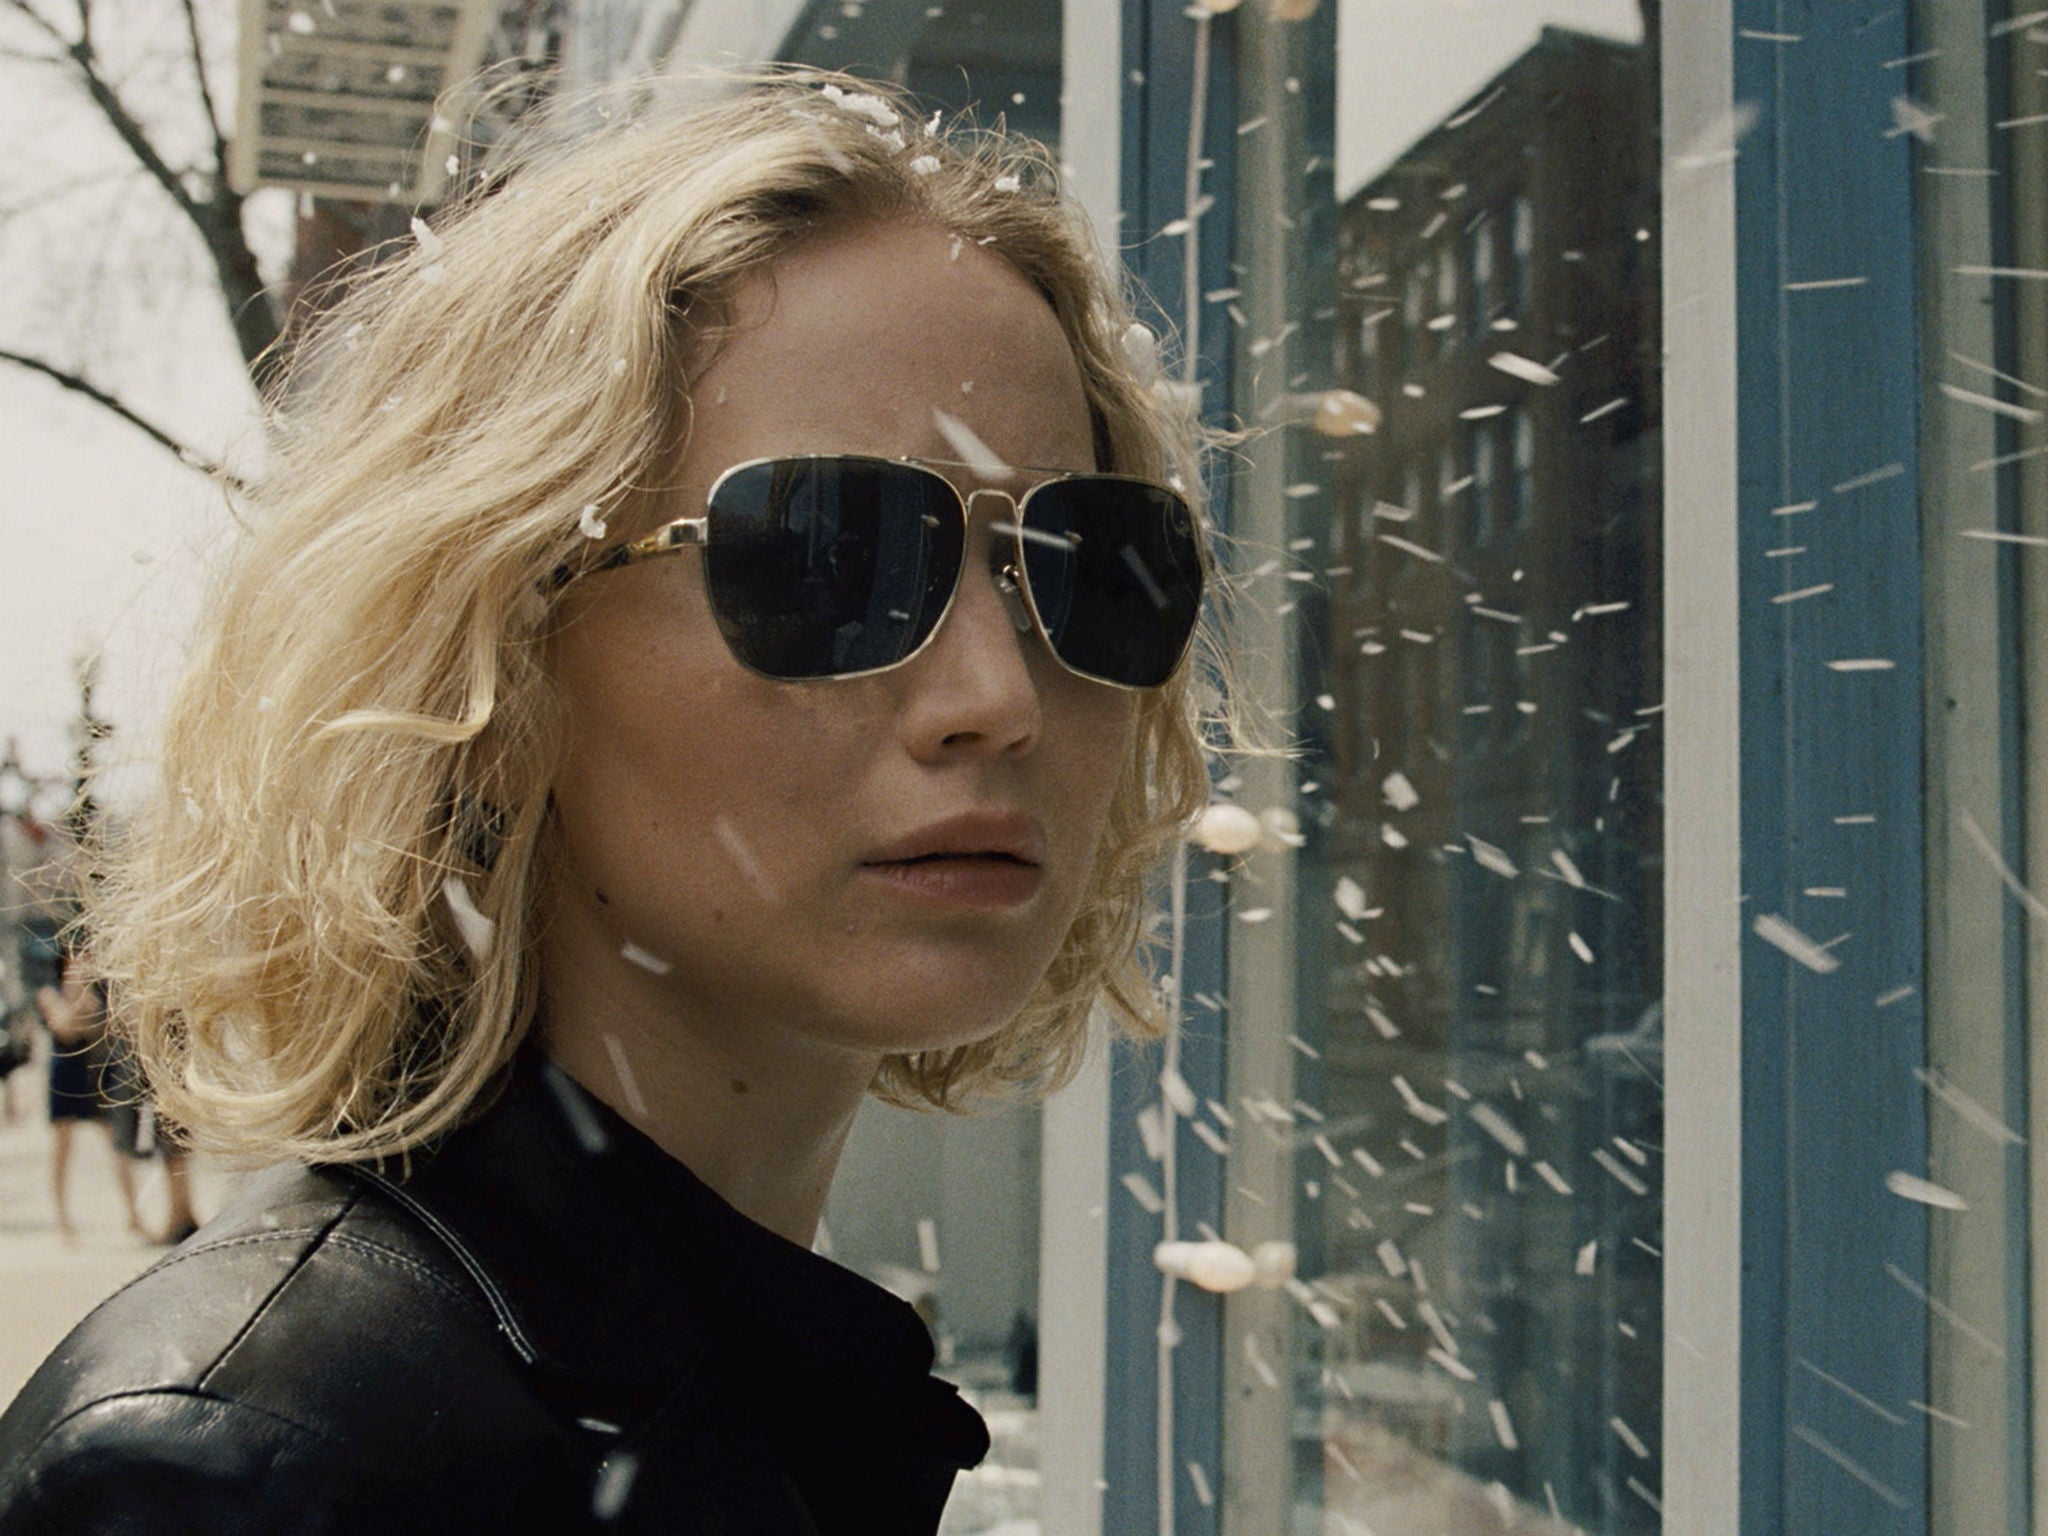 It’s Netflix users’ last chance to watch Jennifer Lawrence film ‘Joy’